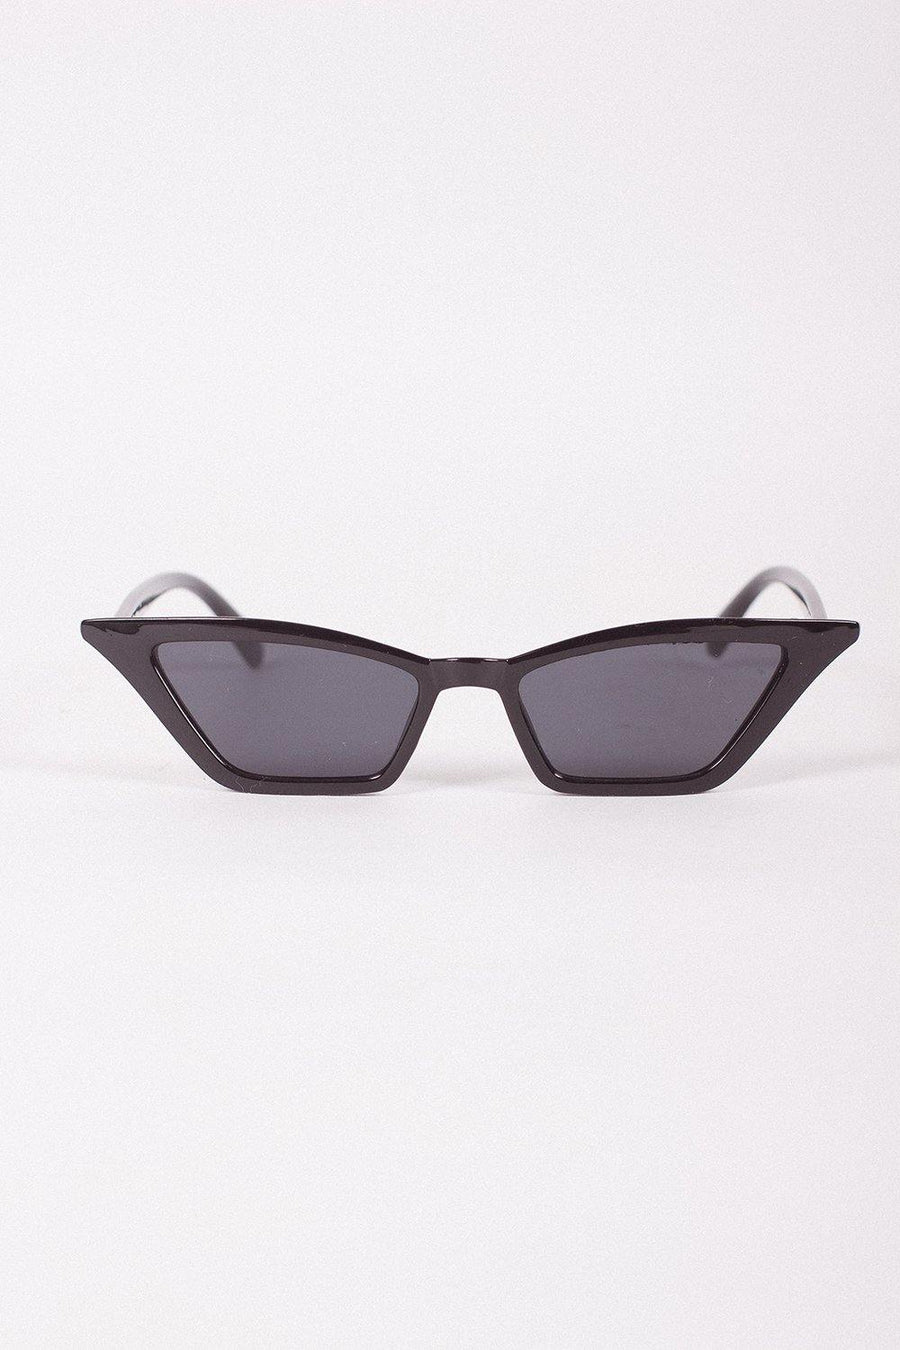 Black Cat Eye Sunglasses - Mawoolisa